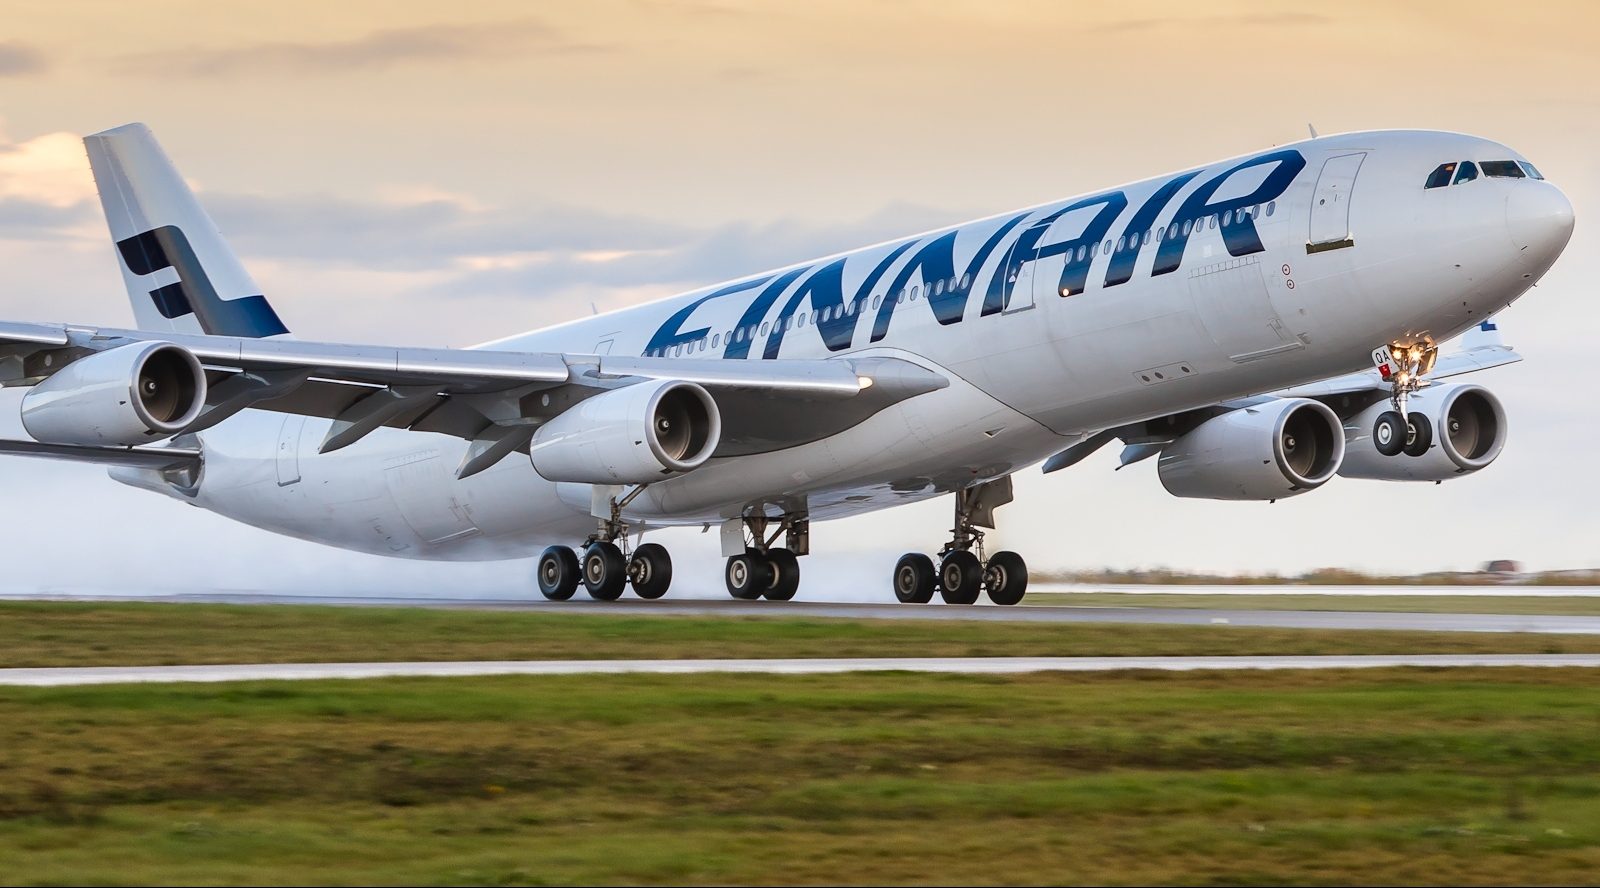                      Finnair Starts Weighing Passengers Before Boarding                             
                     